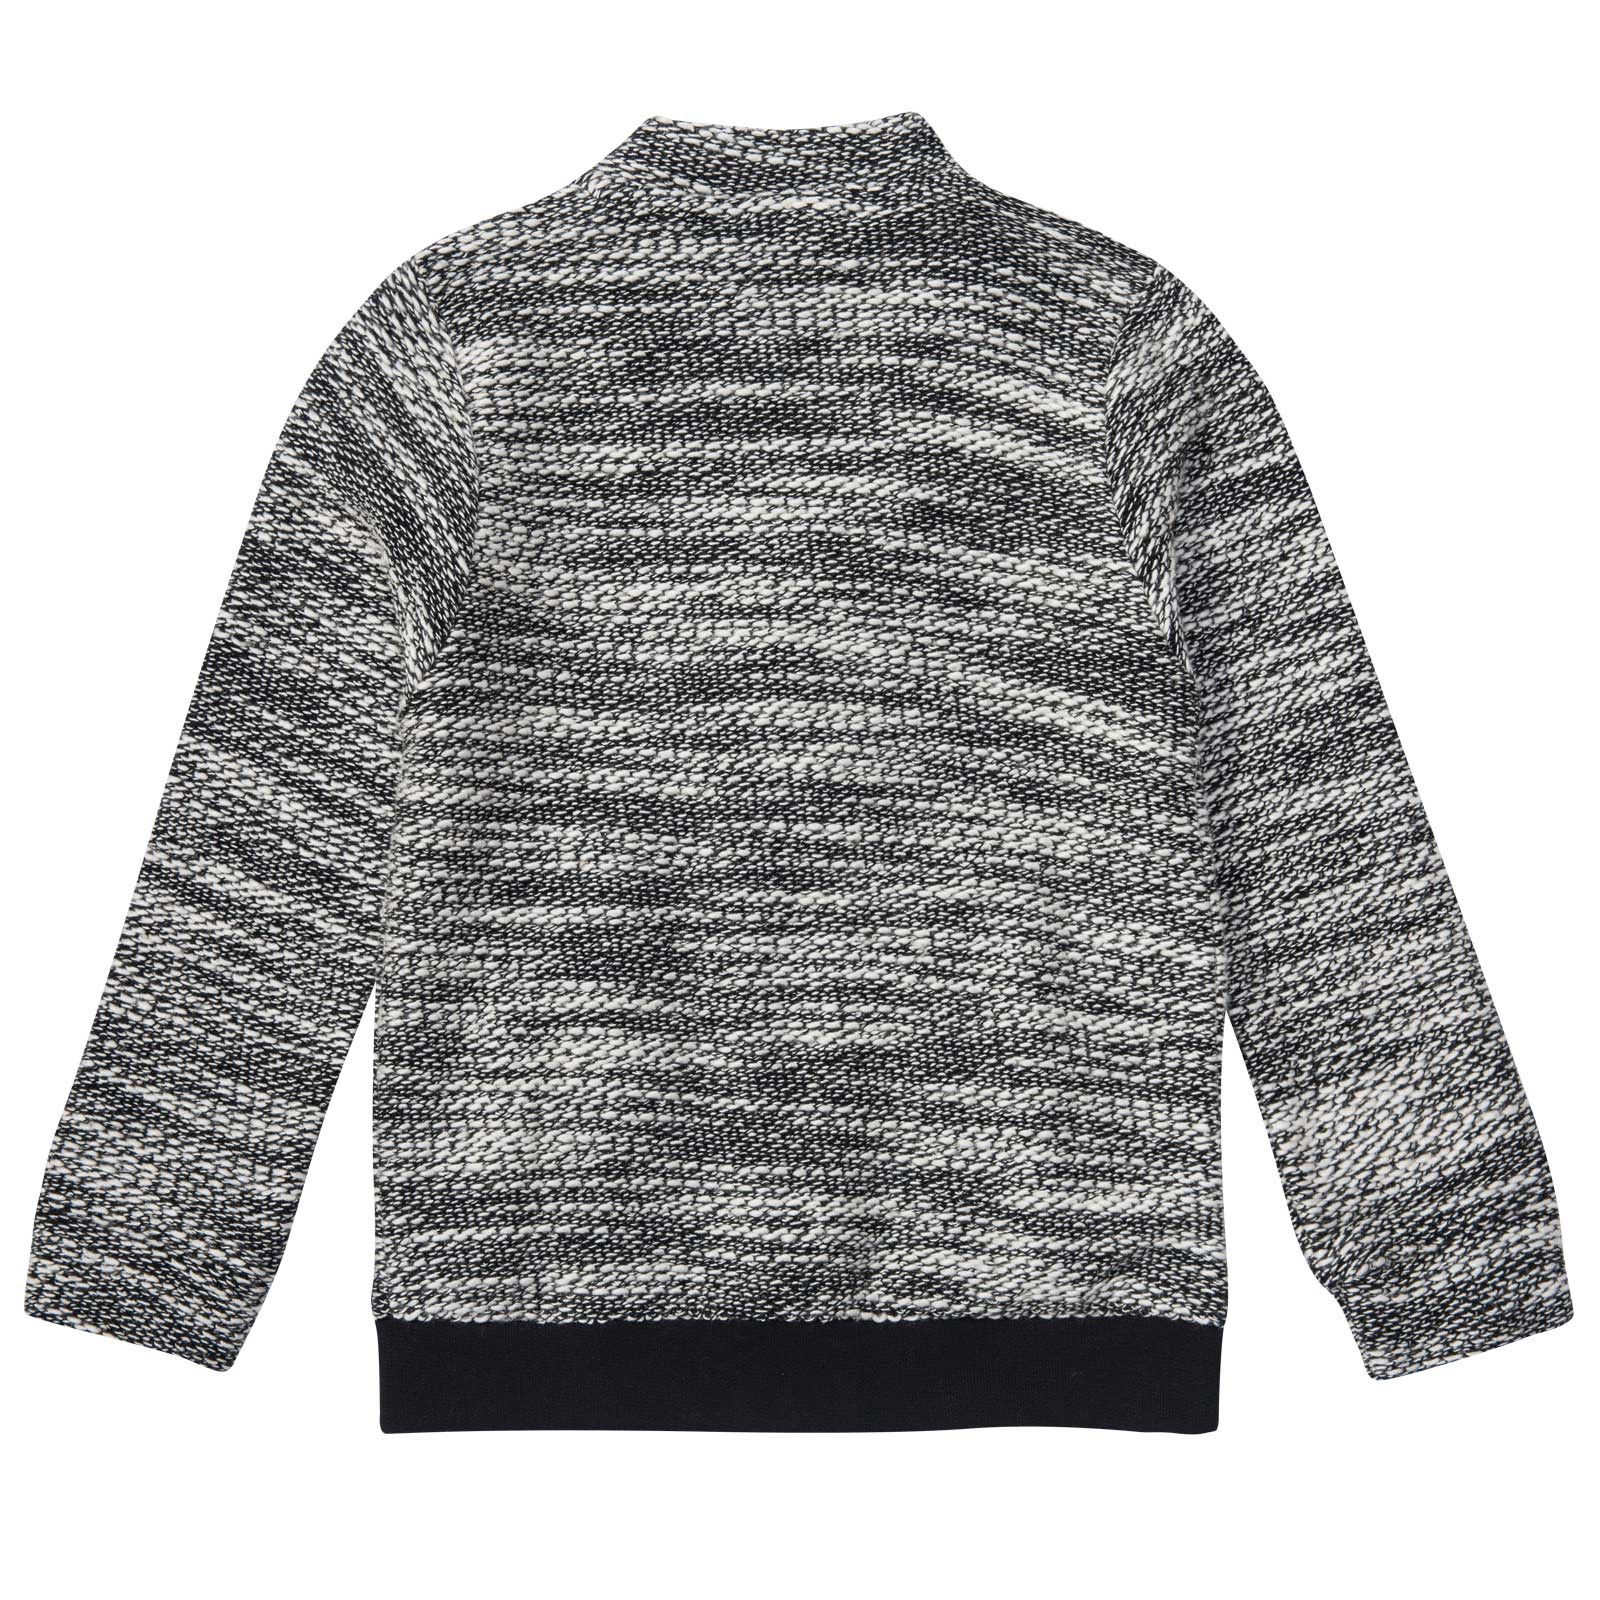 Boys Dark Grey Cardigan With Black Pockets - CÉMAROSE | Children's Fashion Store - 2